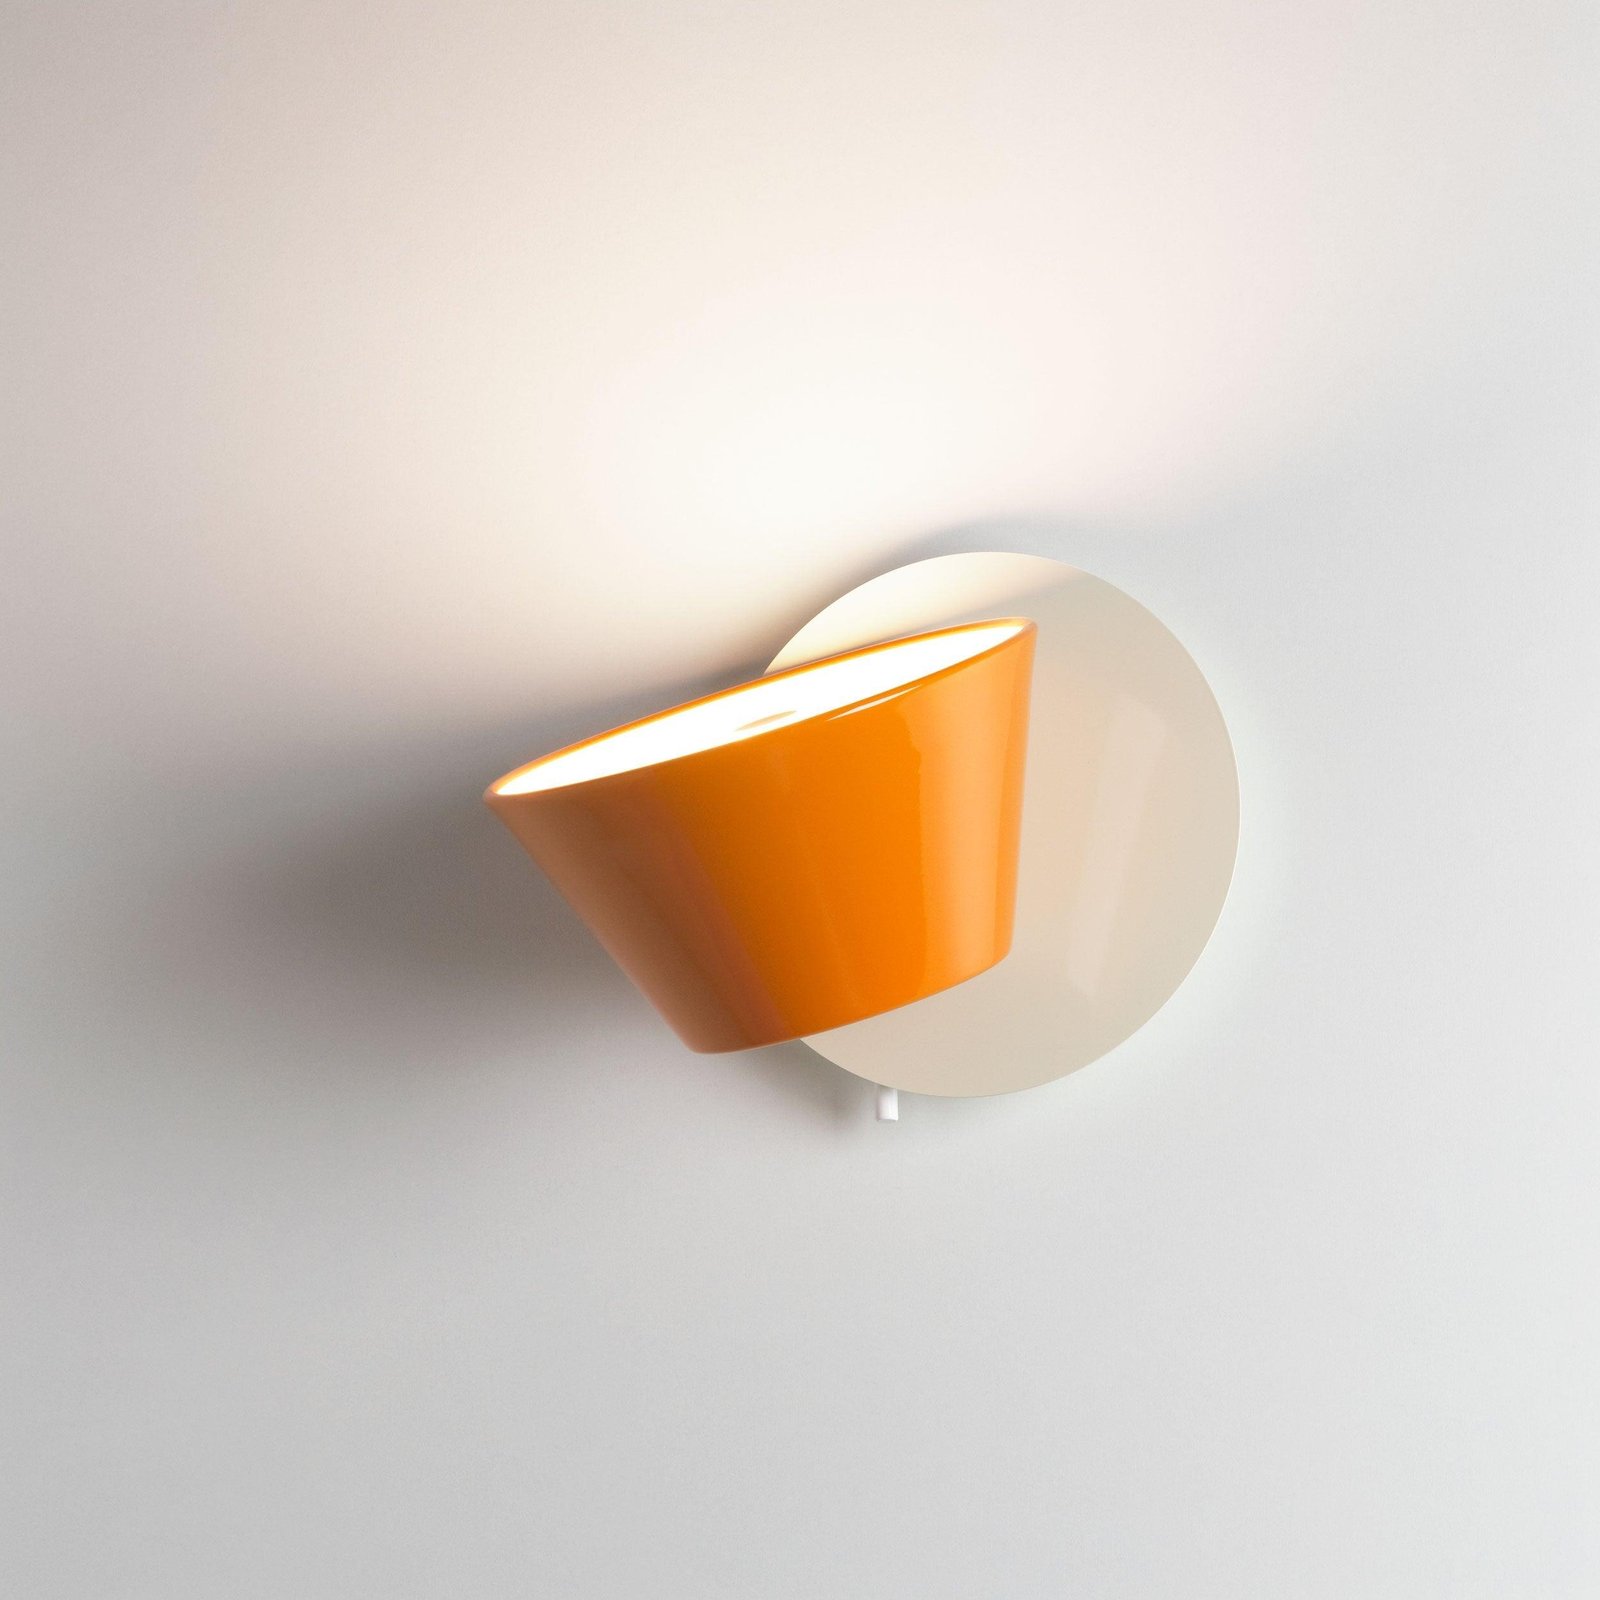 Orange Tam Tam Wall Lamp Set of 2, 16cm Diameter x 16cm Height, Cool White Light